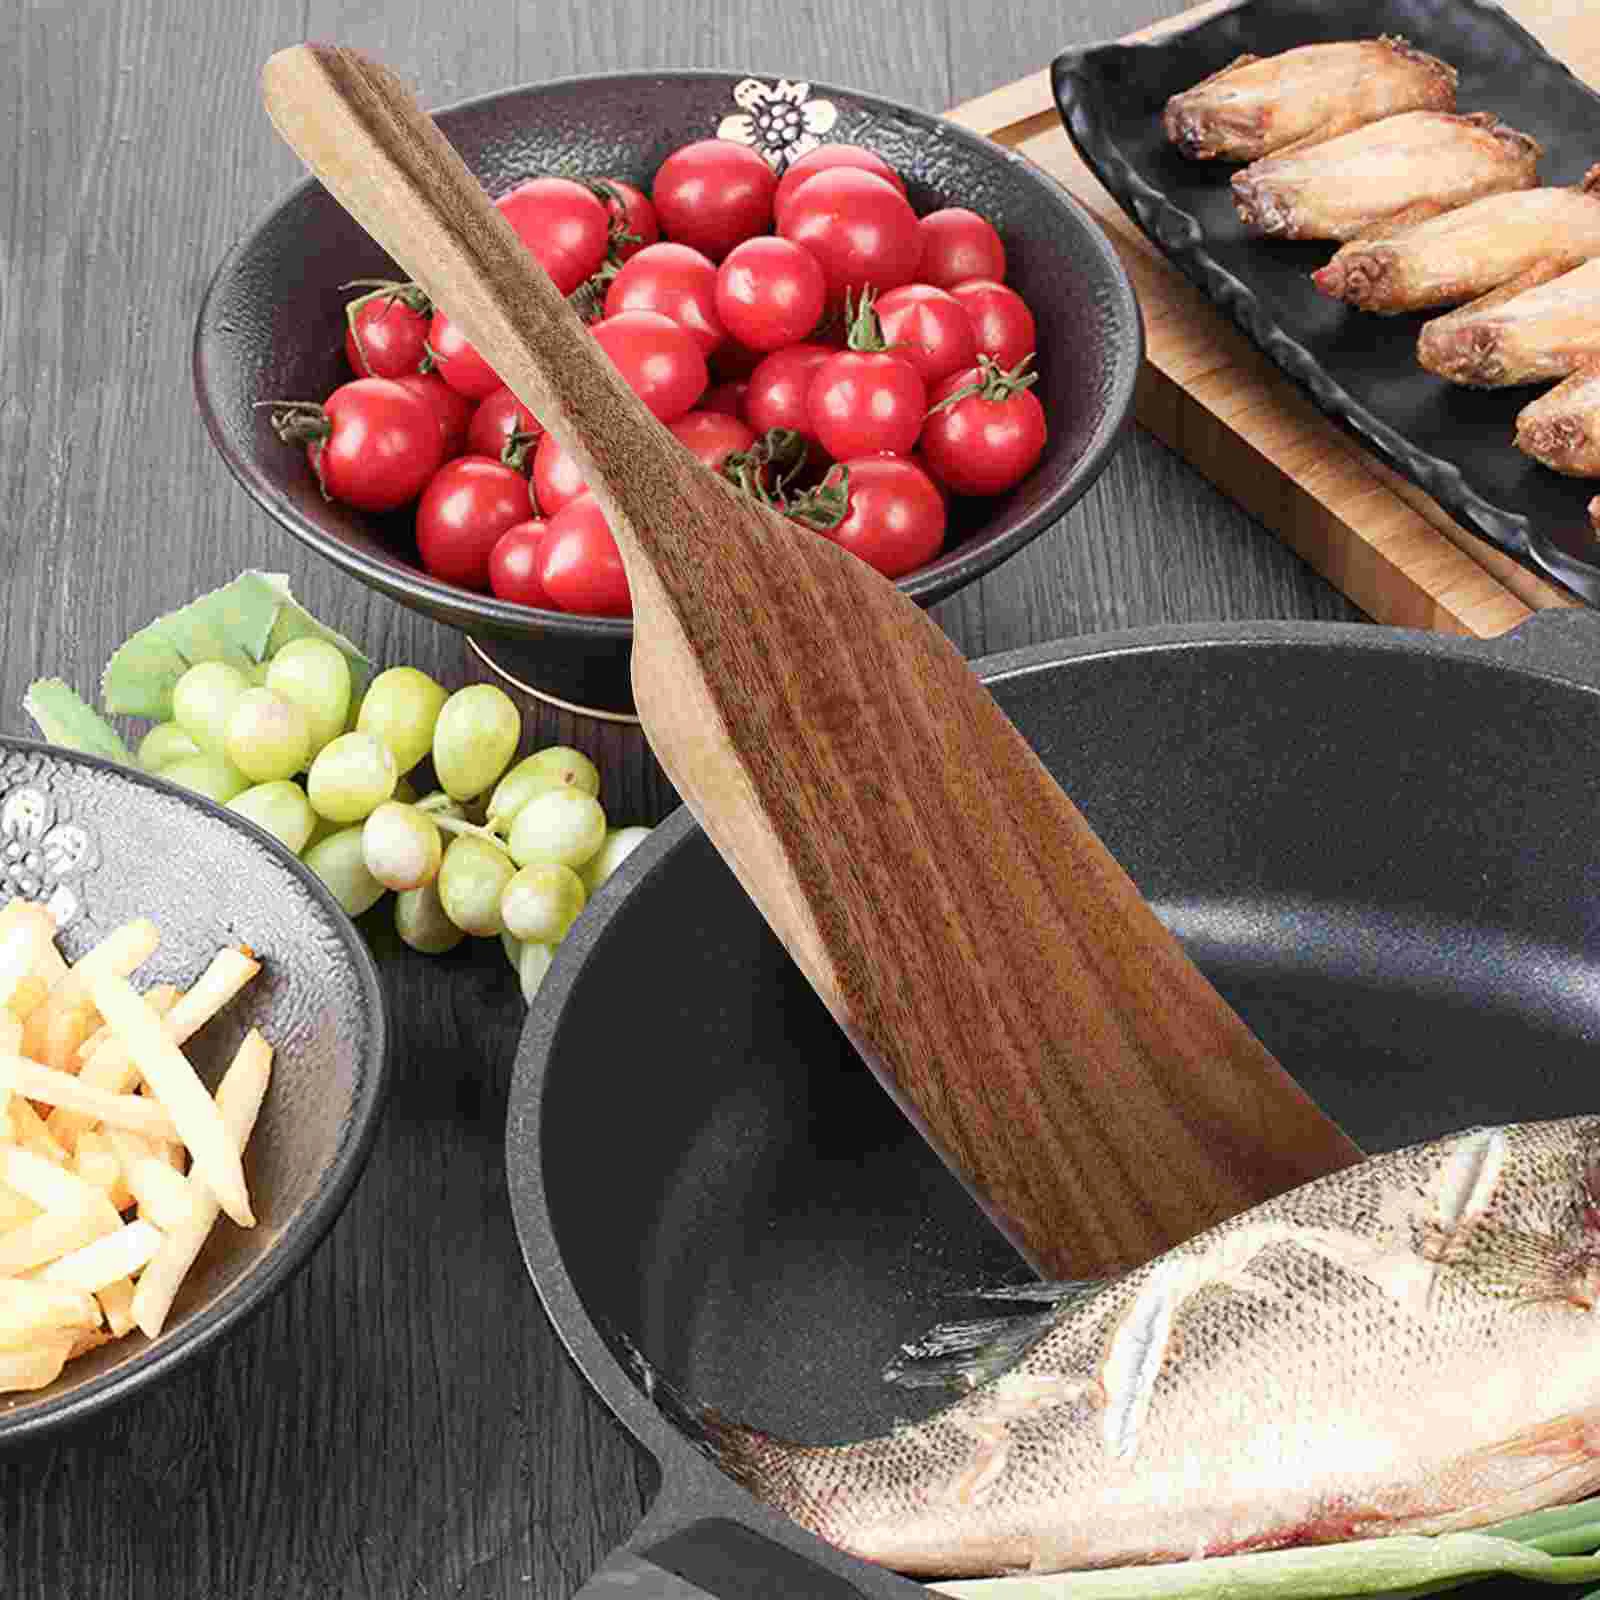 

Wooden Spatula Cooking Wood Spurtles Utensils Kitchen Spoons Spoon Turner Scraper Non Mixing Sets Teak Cookware Stick Nonstick